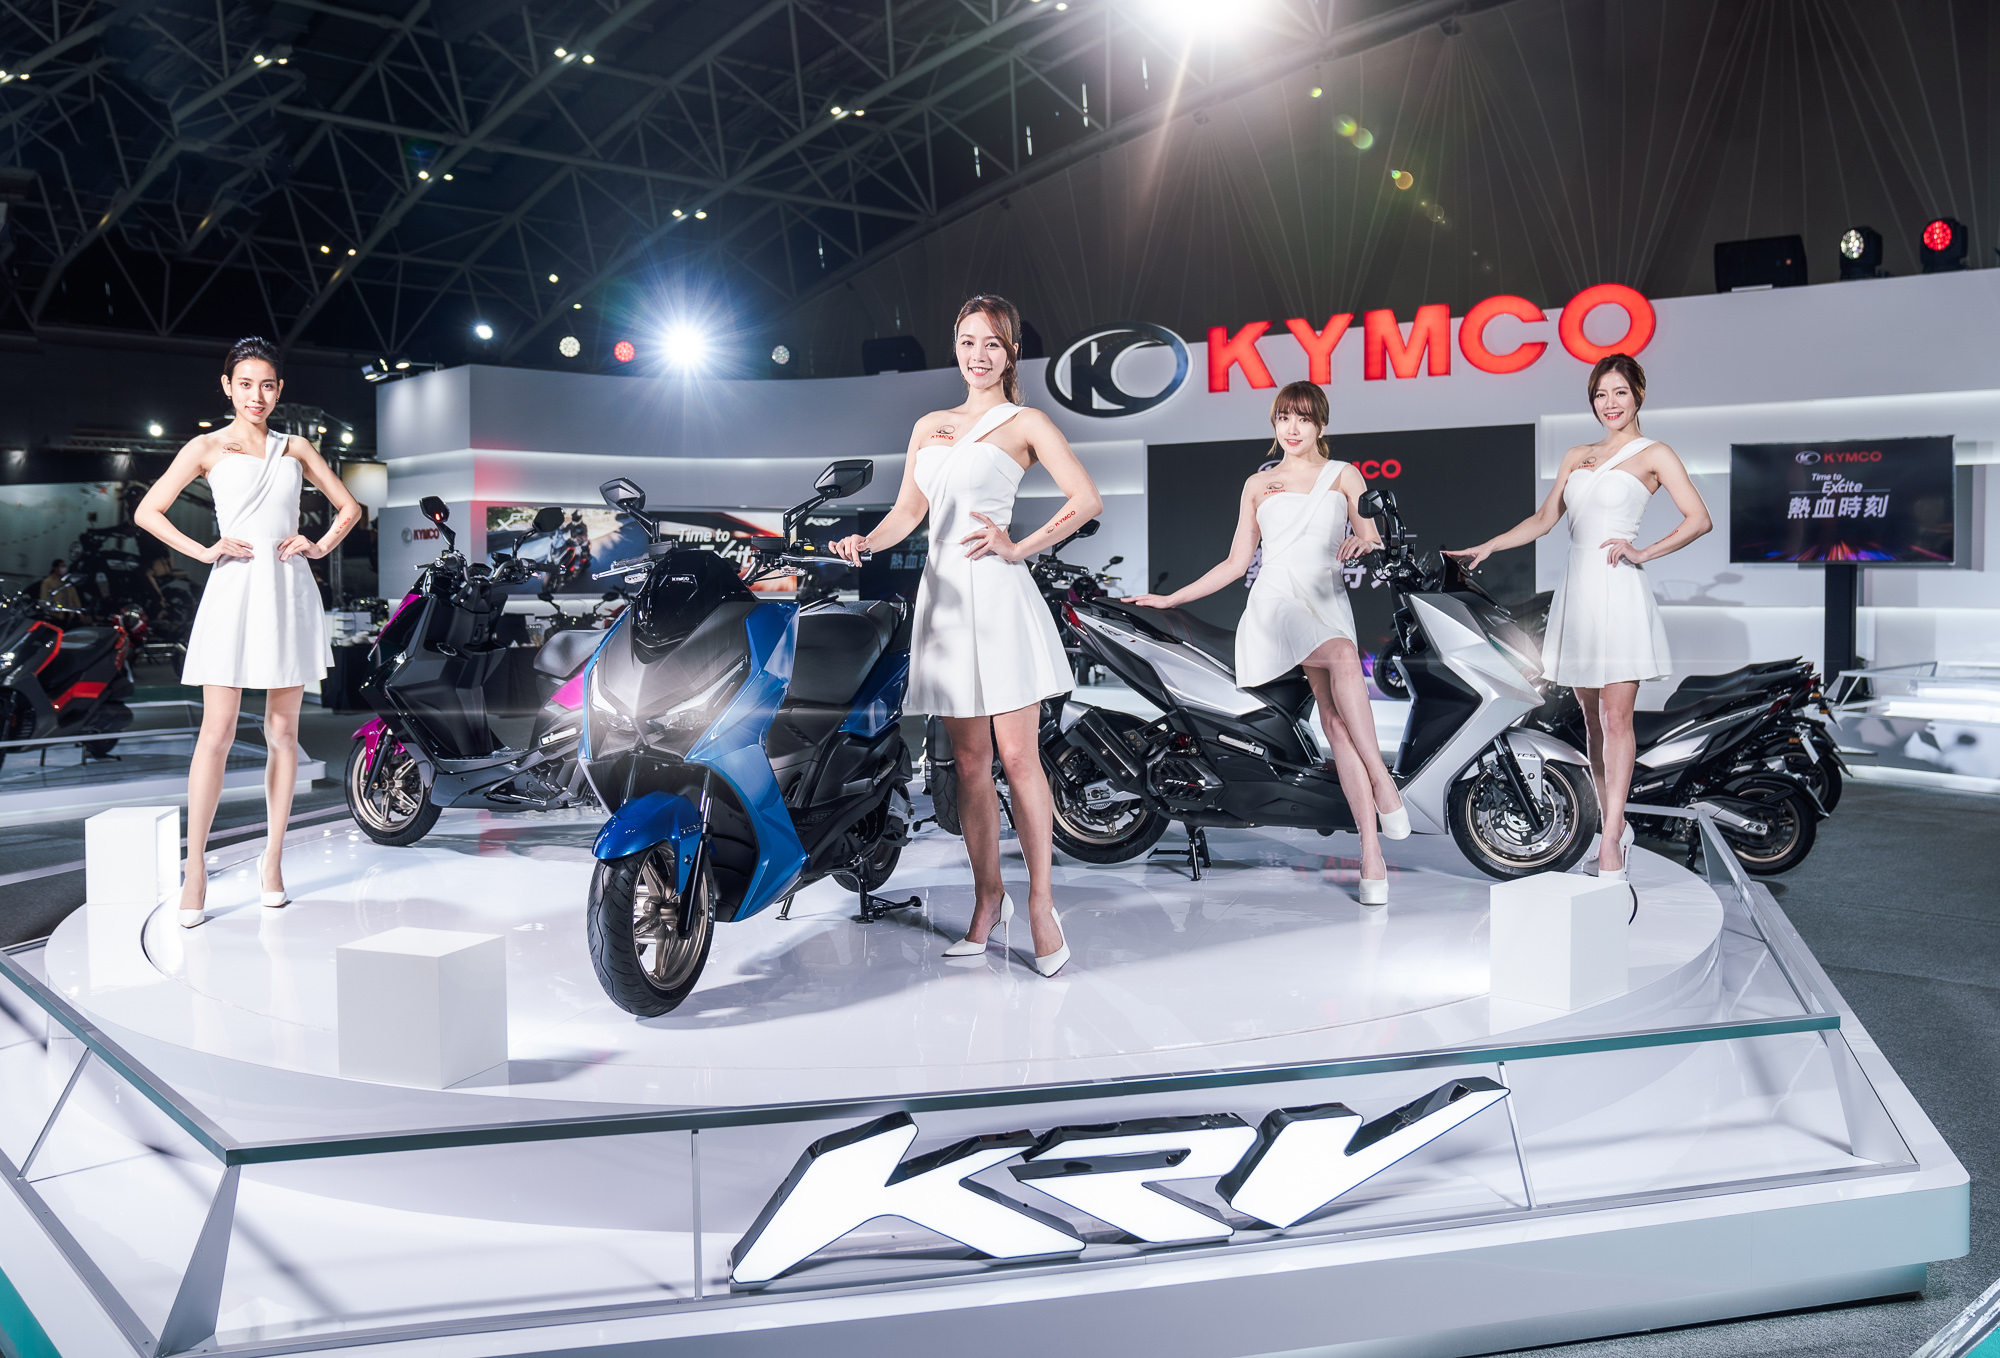 Kymco 白牌旗艦車款 KRV 預計 2 月底將突破 6,000 張訂單。